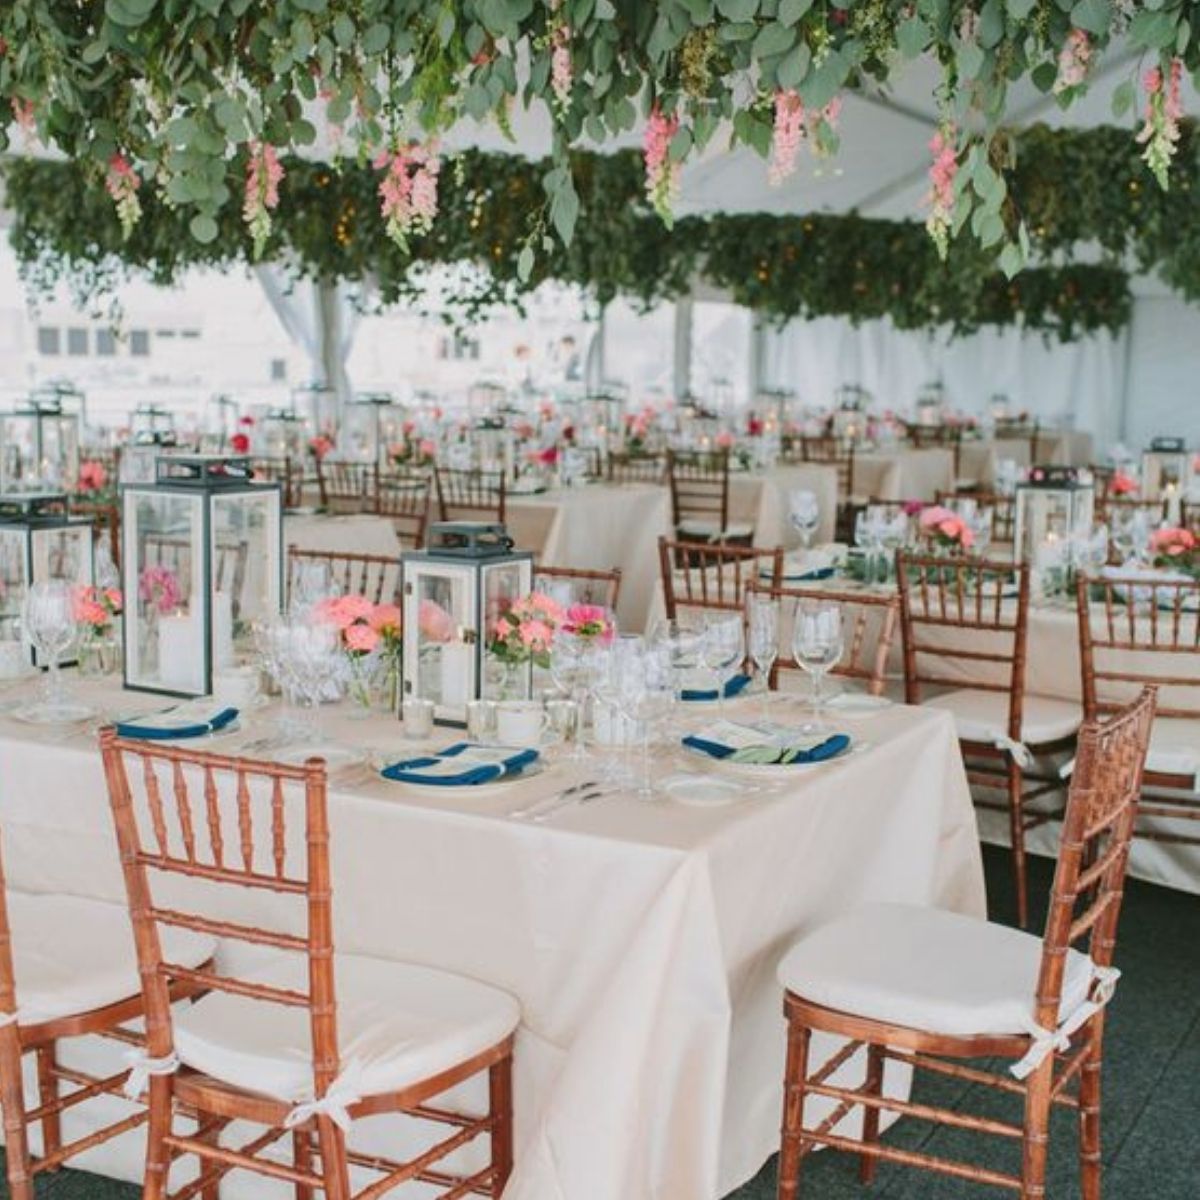 Wedding Reception Seating Configuration Ideas: Top 10 | DIY Guide